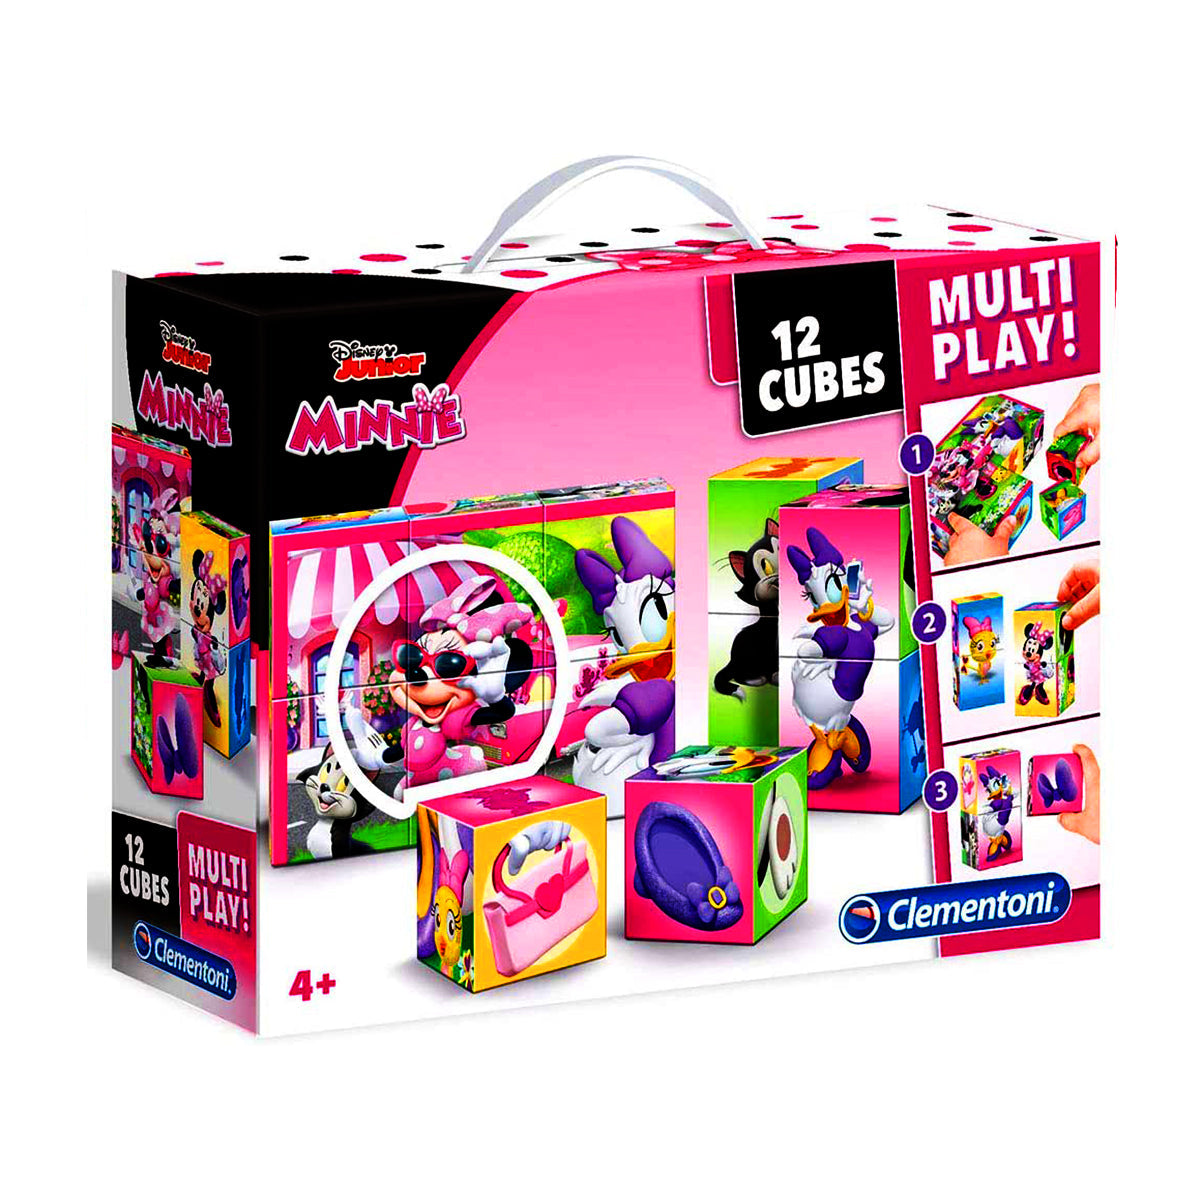 Clementoni - Multiplay Cube Puzzle - Disney Minnie - 12 Pcs